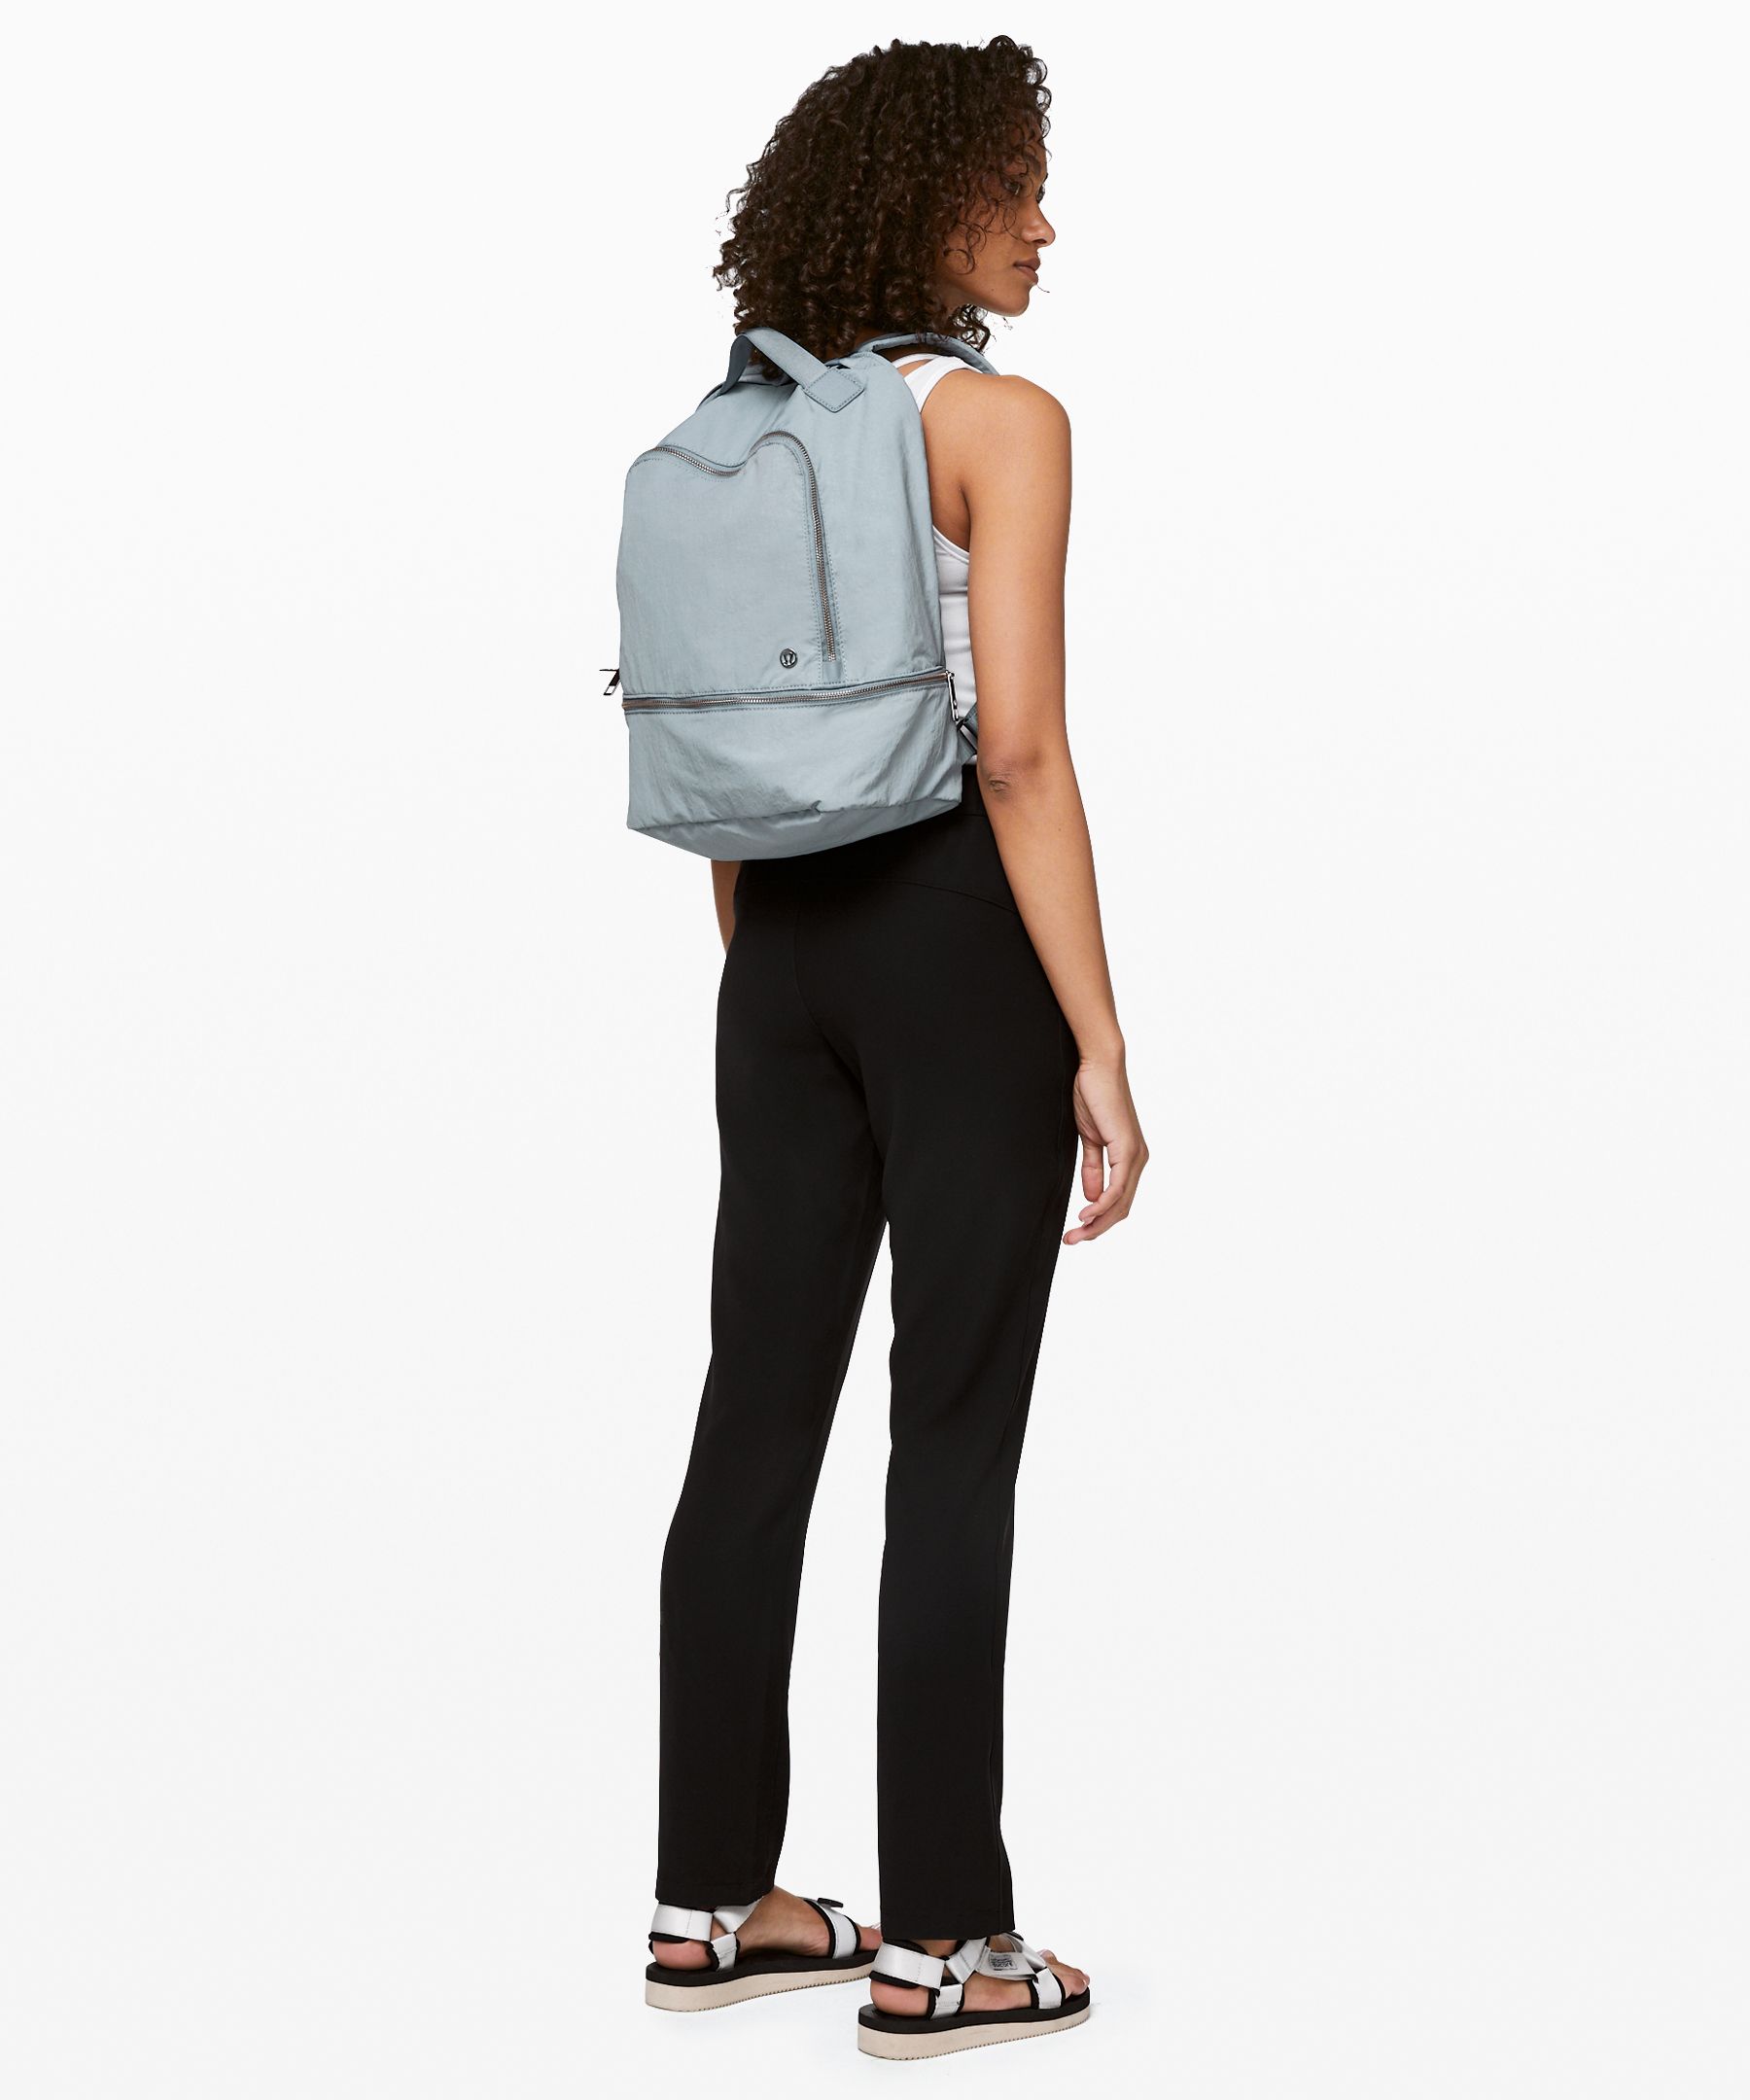 City Adventurer Backpack - Fashion & Fernweh